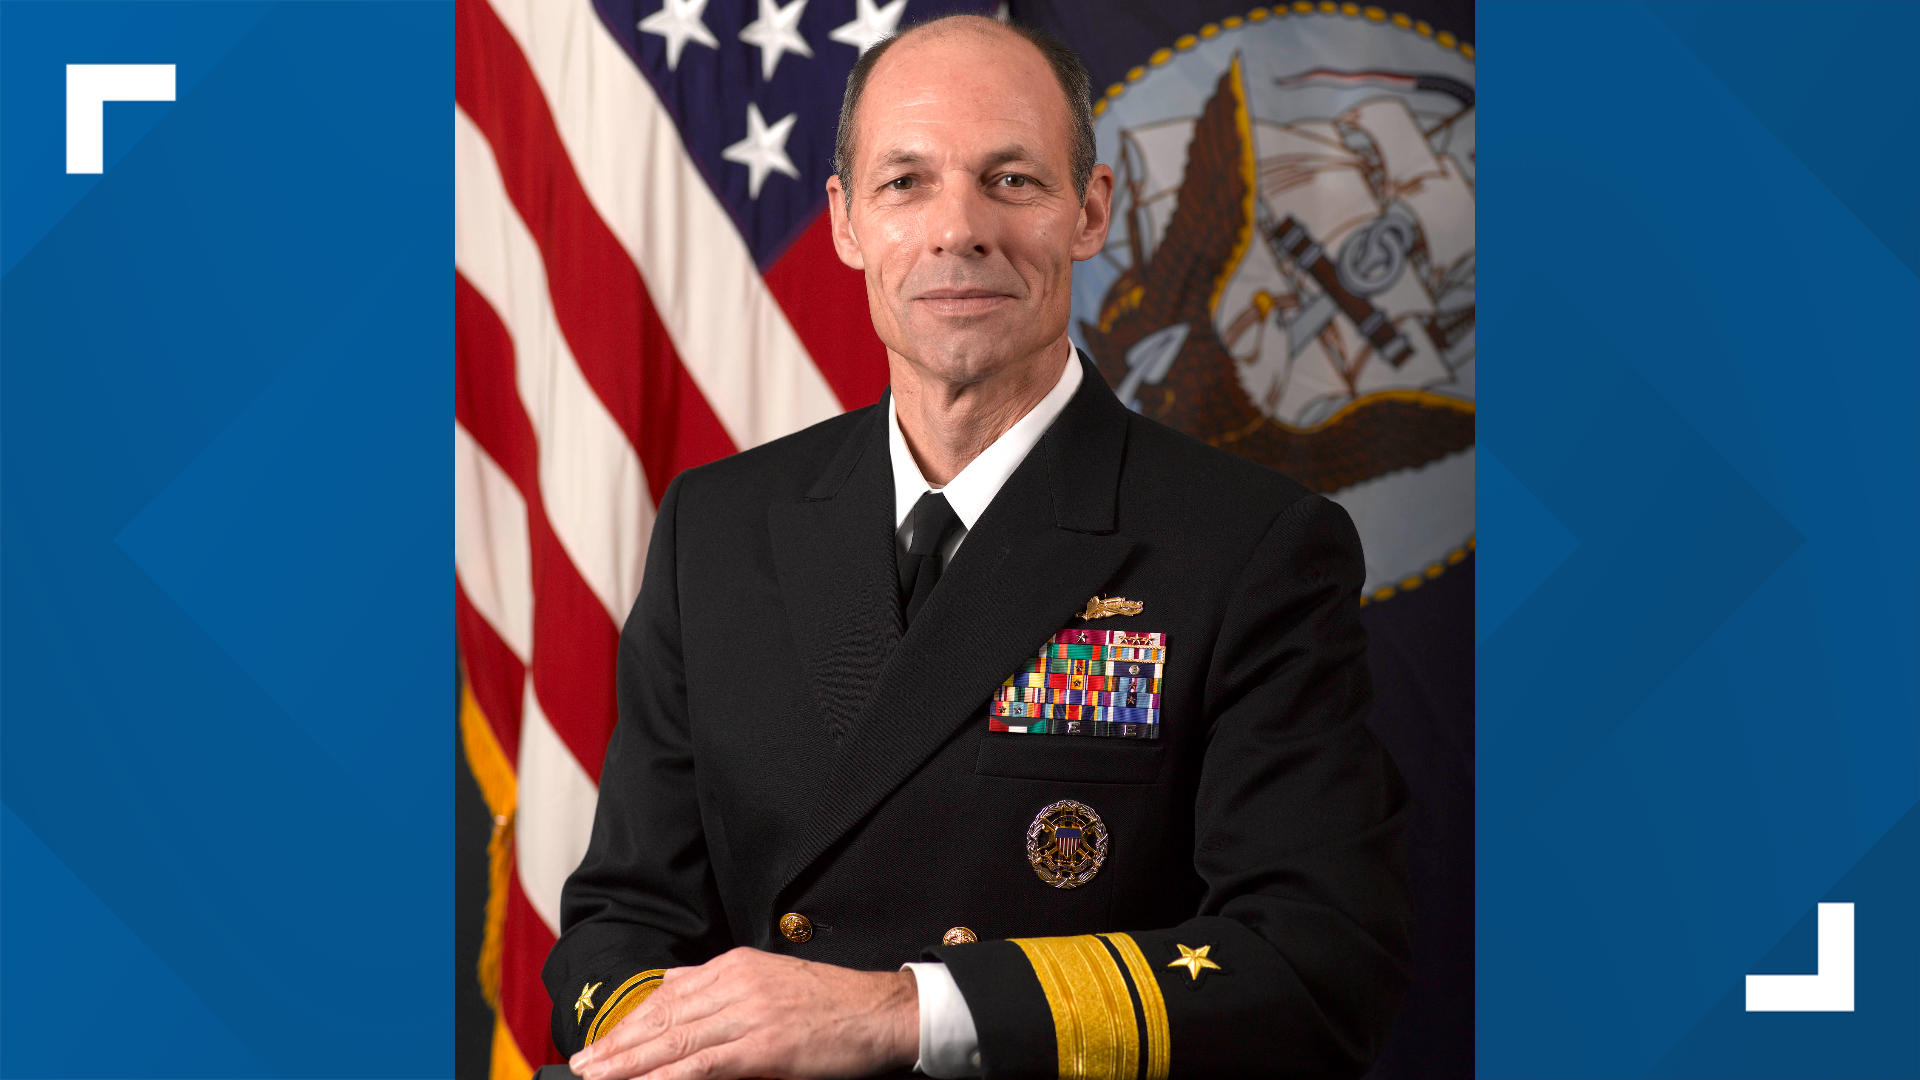 Retired Admiral Michael Franken will face Chuck Grassley in November.